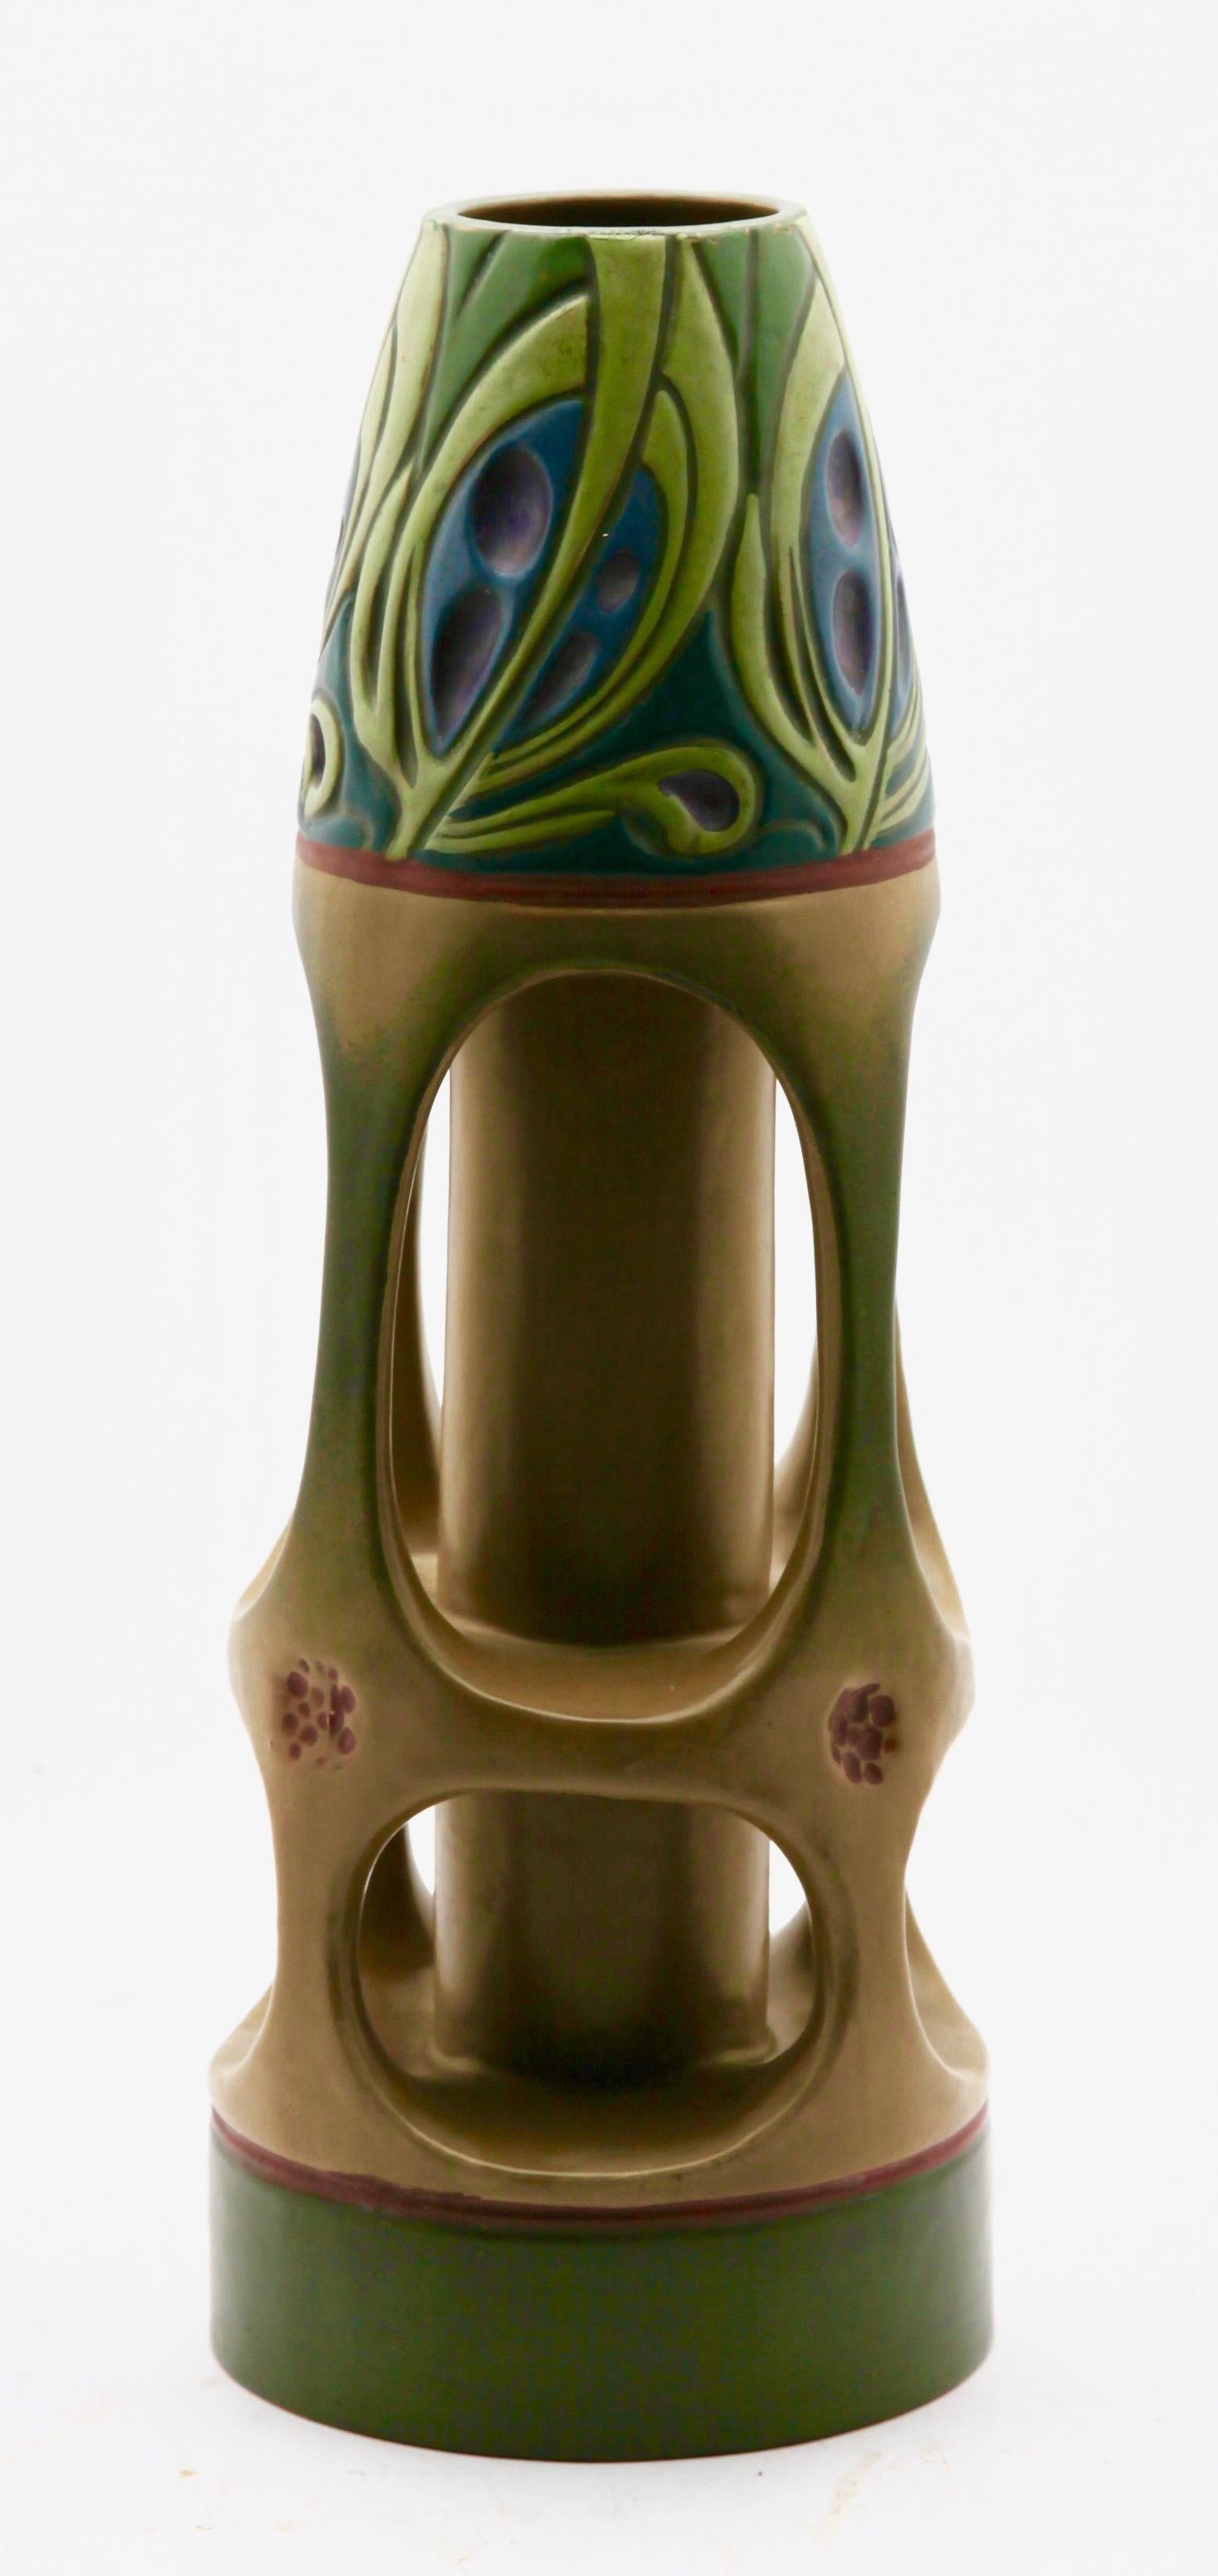 Austrian Pair of Art Nouveau Vases, 'Amphora' by Julius Dressler, Vienna, circa 1905